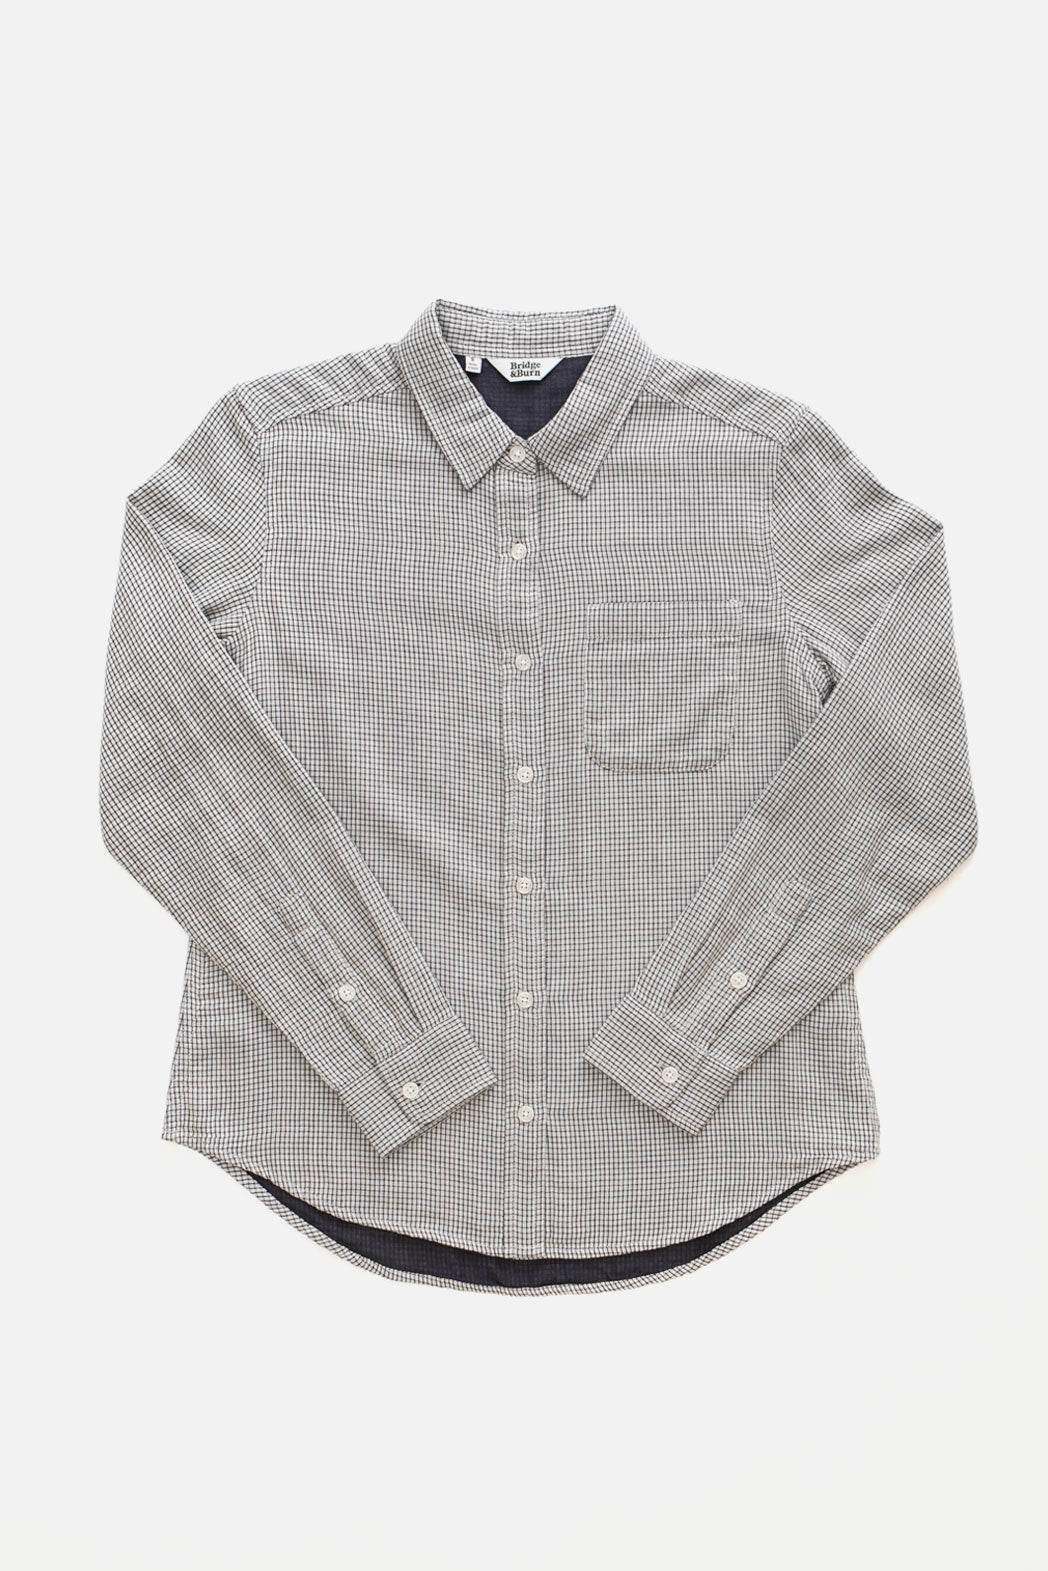 Ash Slim Shirt / Ivory Grid Doublecloth